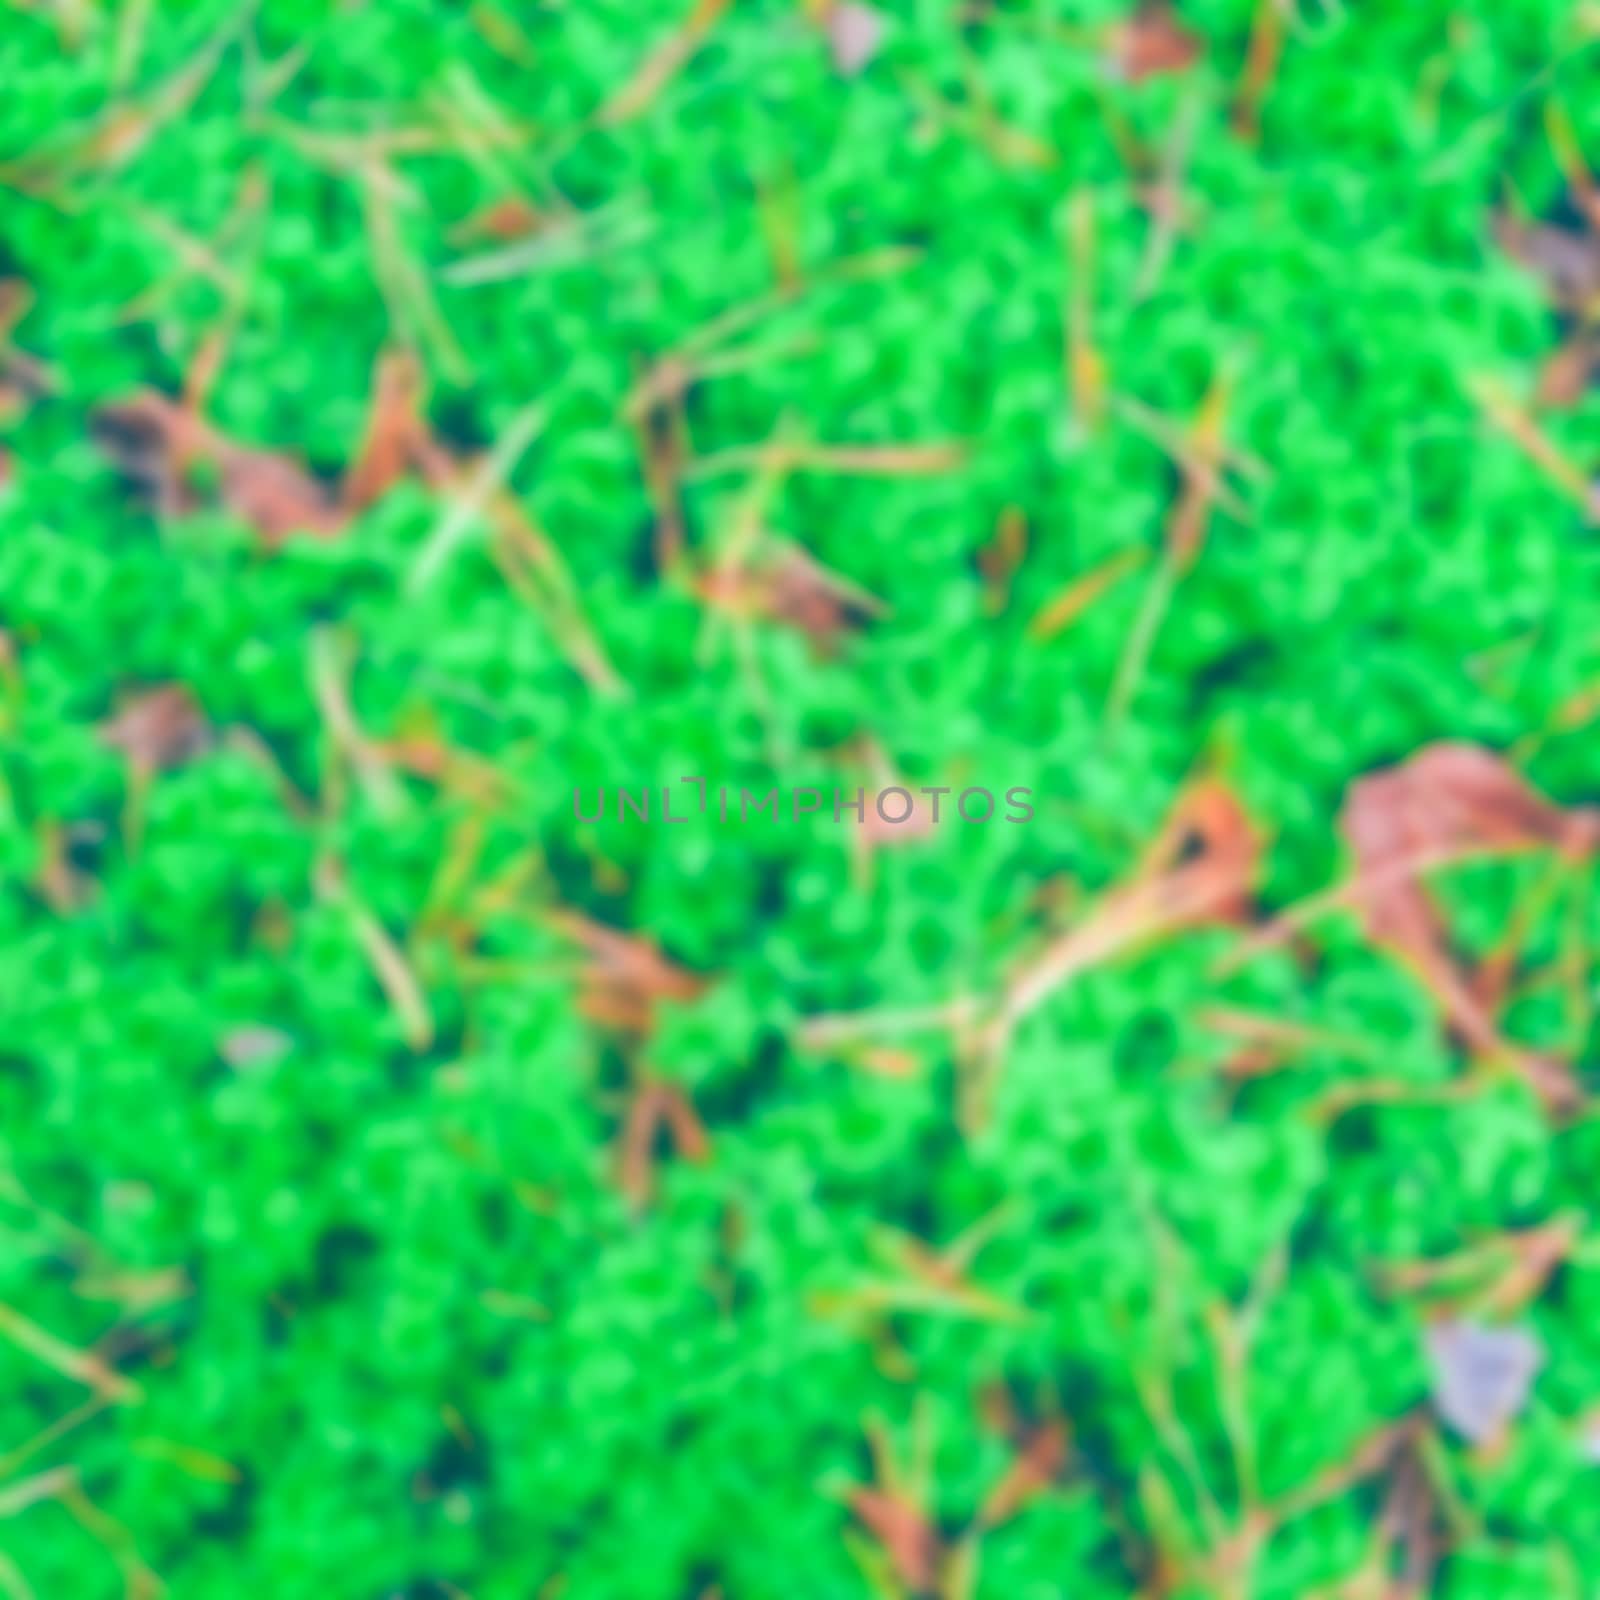 Green moss - soft lens bokeh image. Defocused background